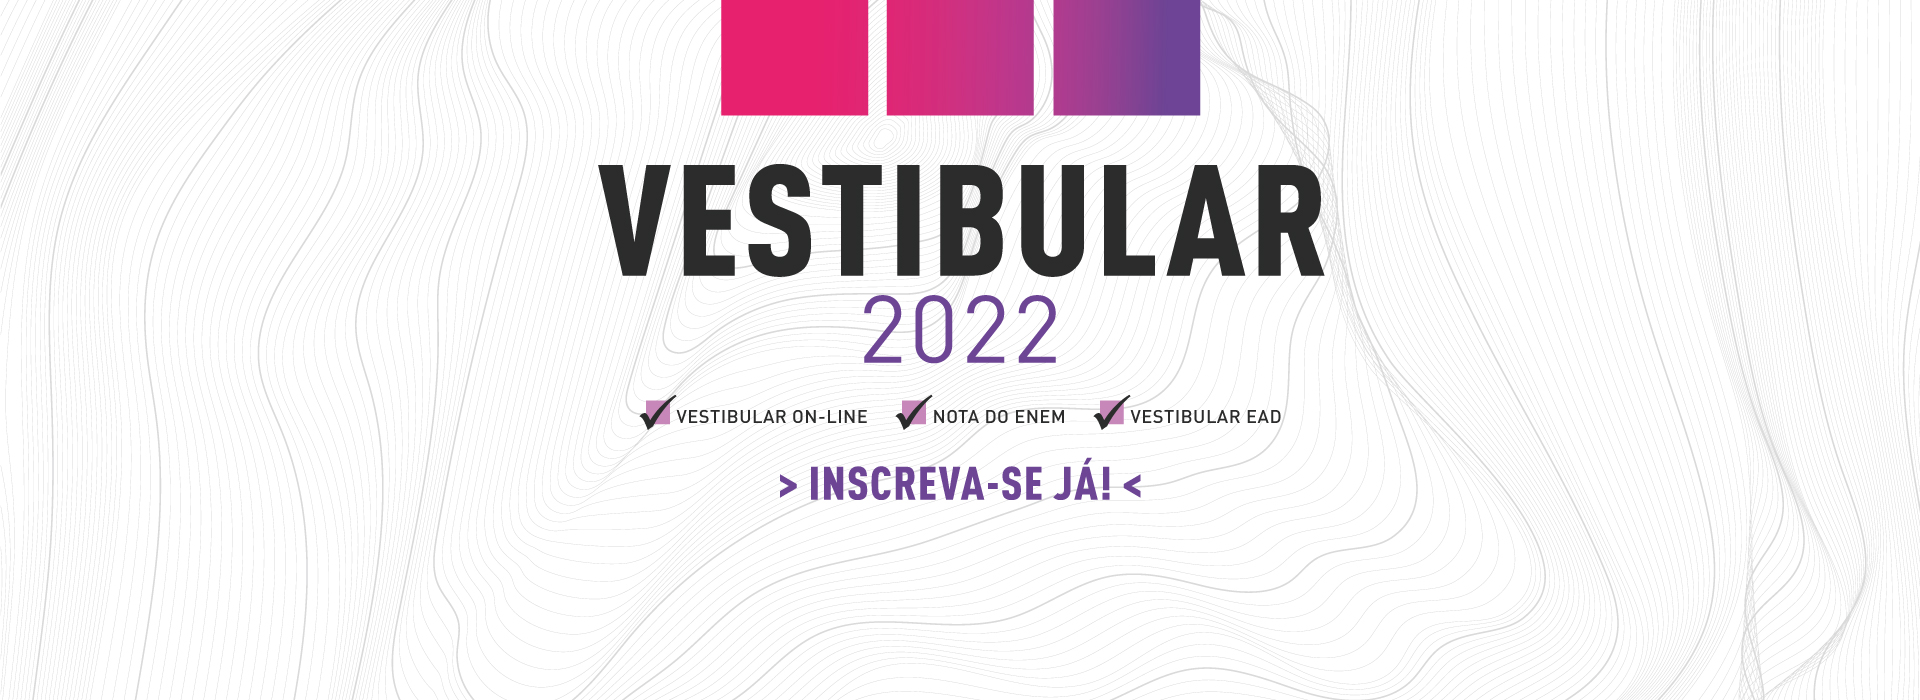 Vestibular 2022 - Top Cursos